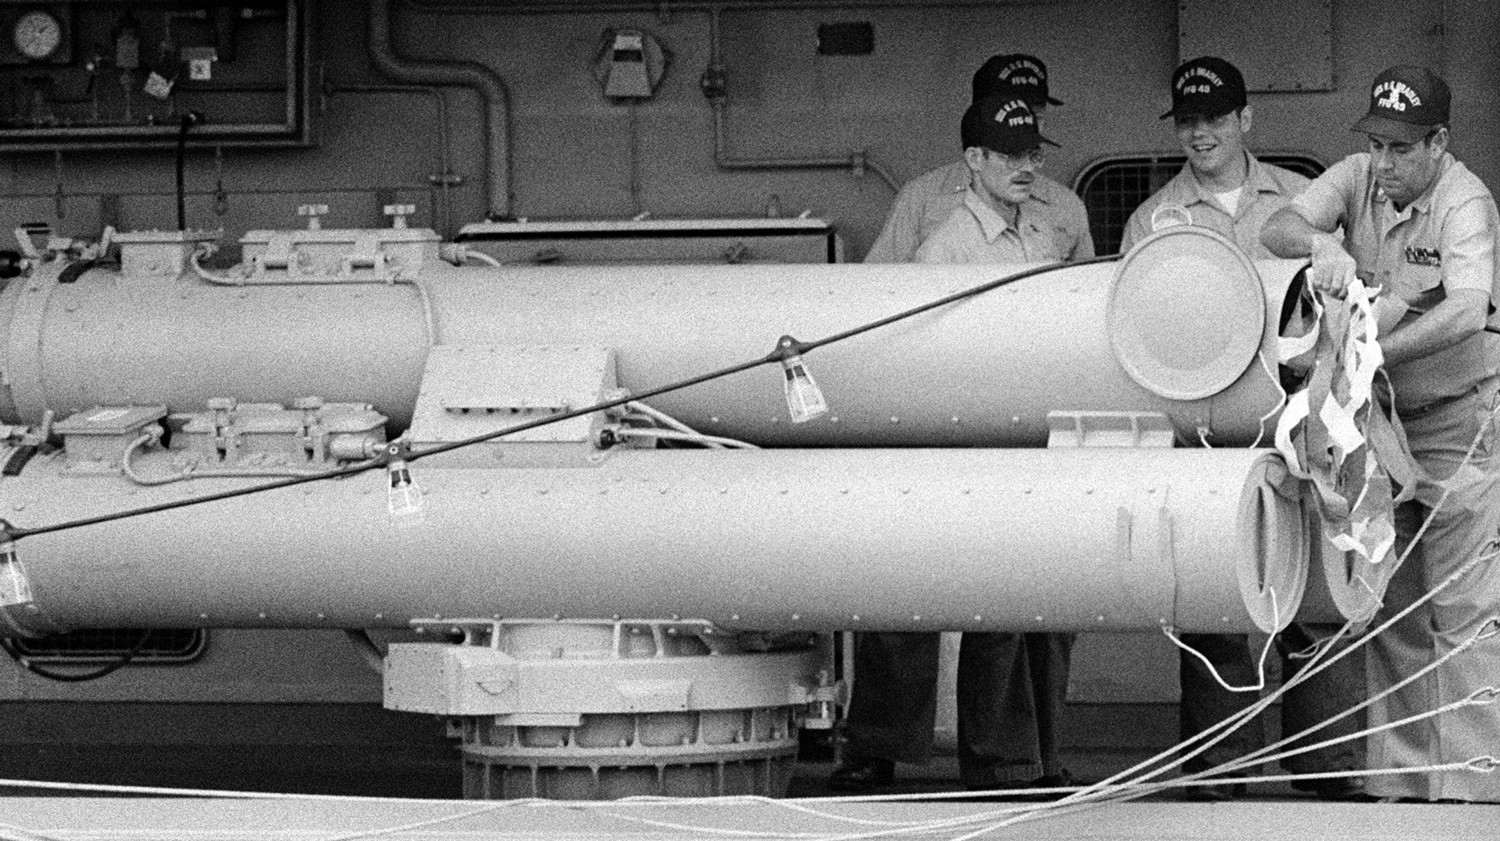 mk-32 torpedo tubes svtt 52 oliver hazard perry class frigate ffg